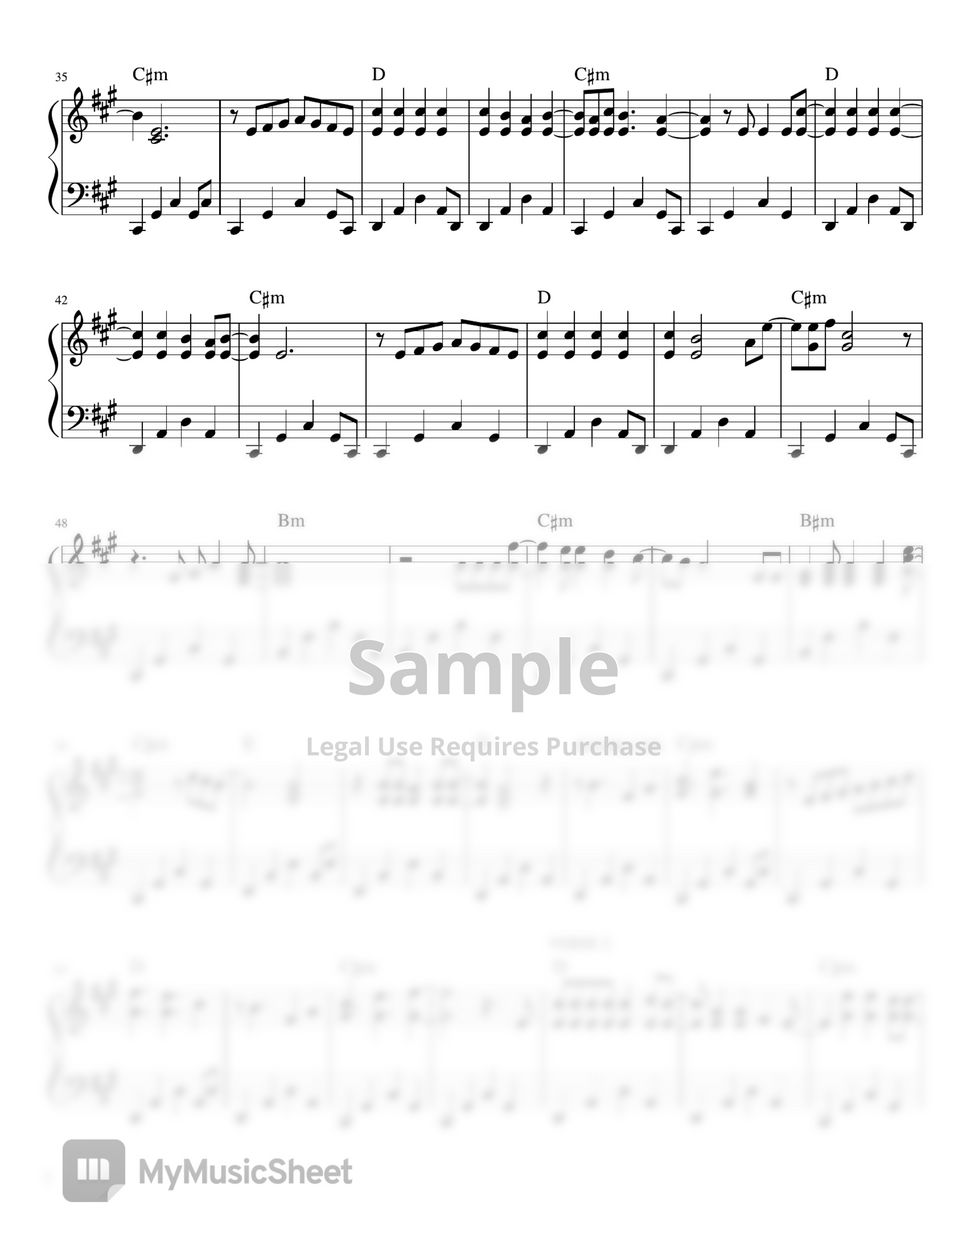 Magnus Haven - Imahe (piano sheet music) by Mel's Music Corner